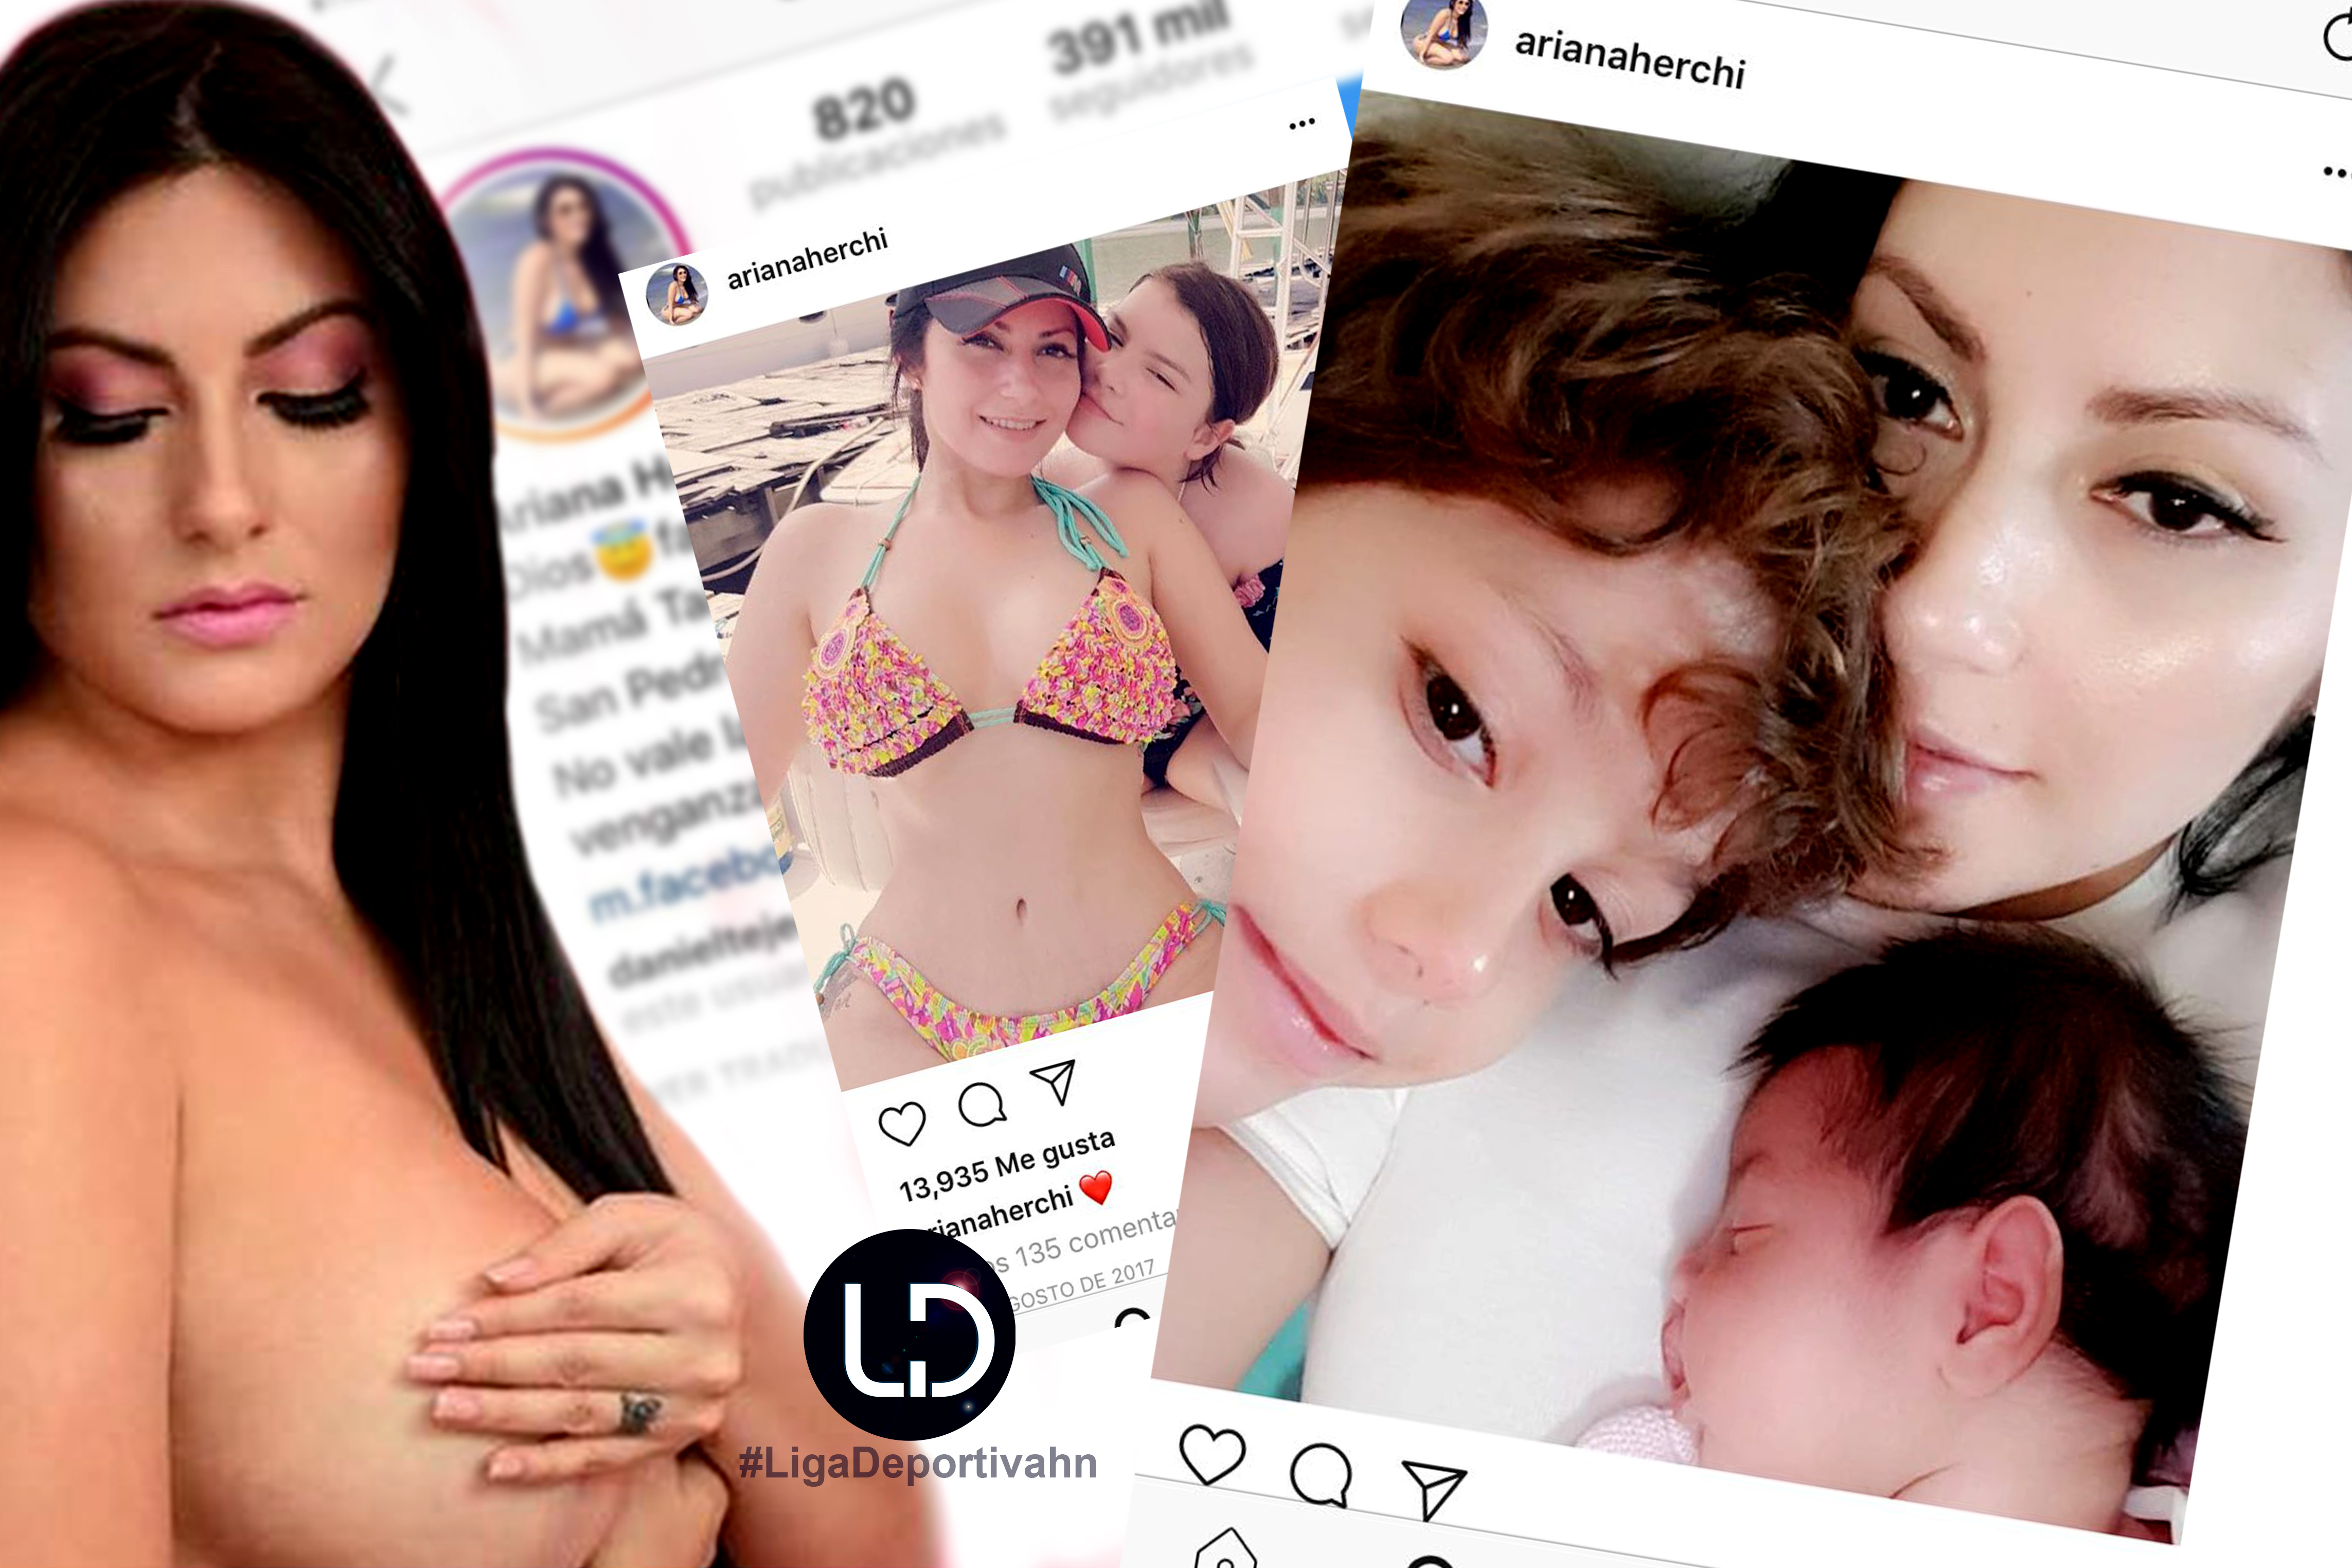 Hondureñas: ¡Las mamacitas del Instagram! 